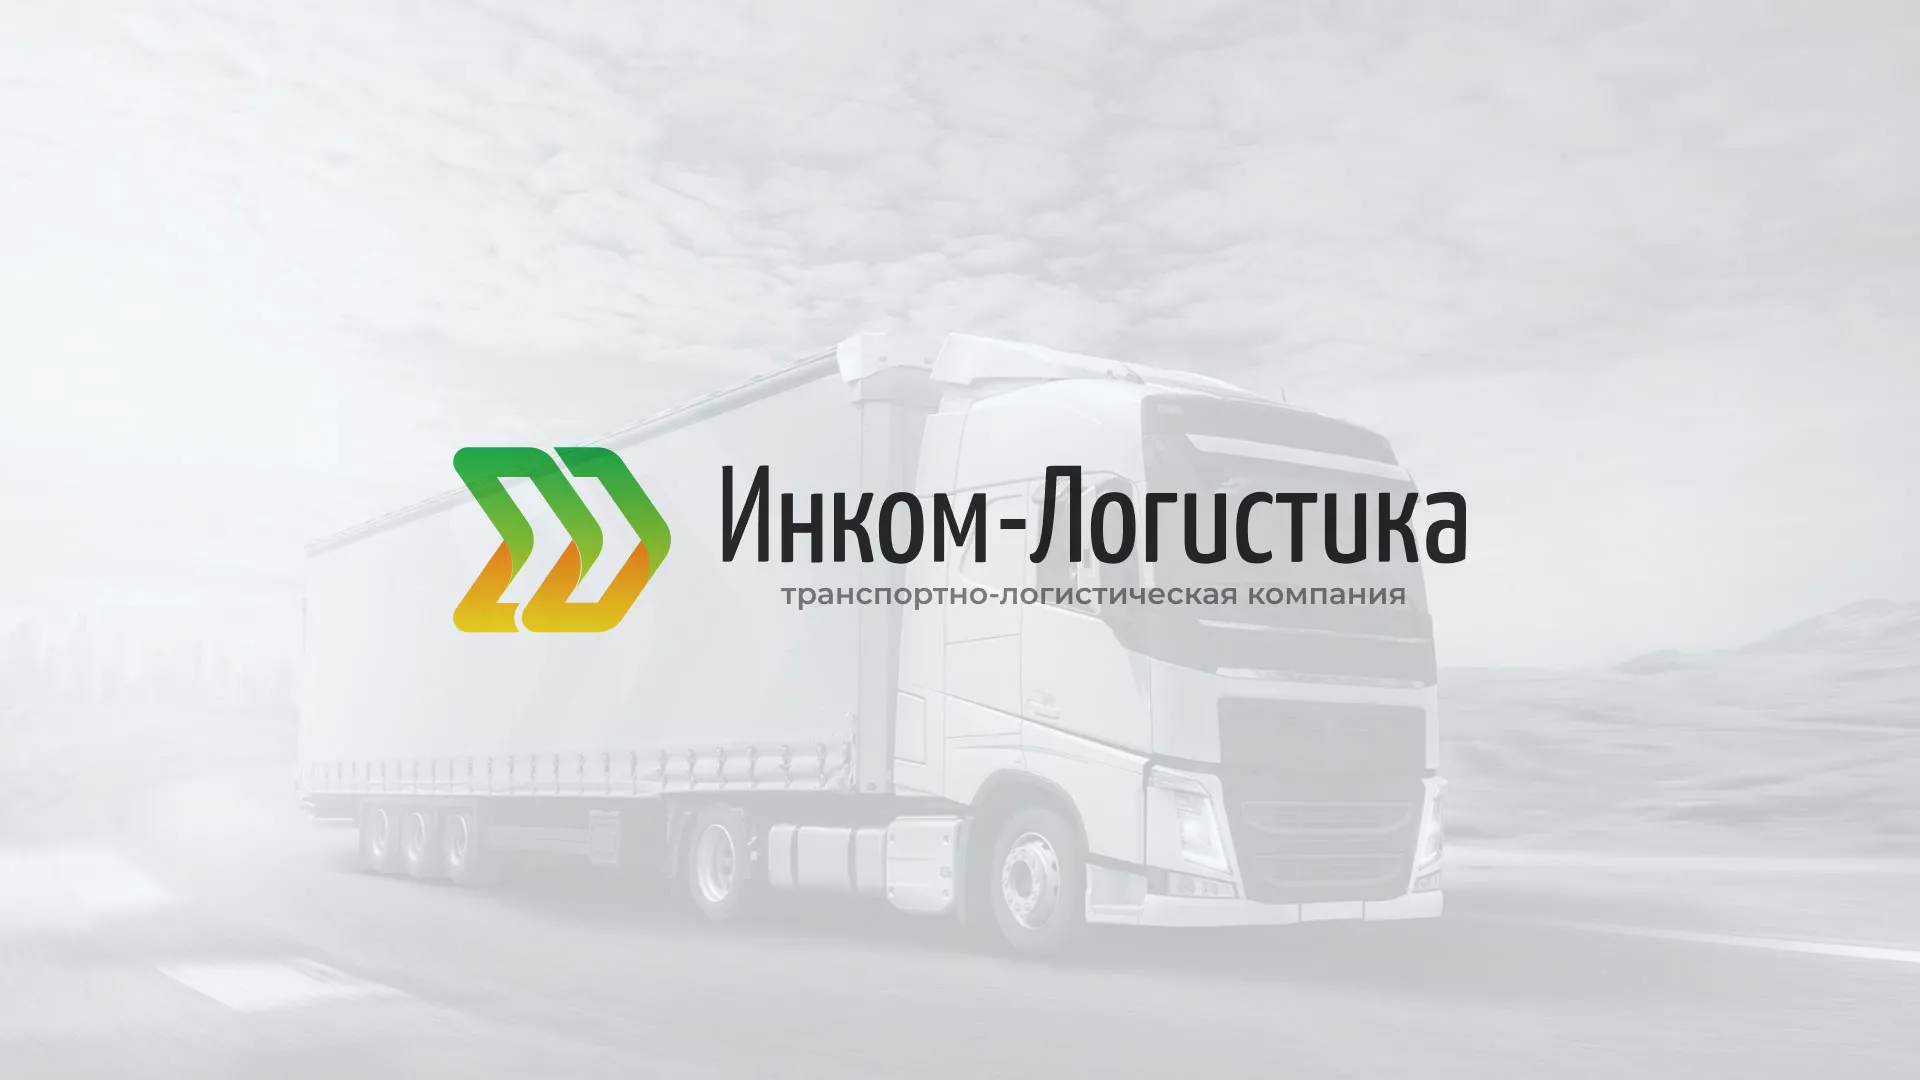 Разработка логотипа и сайта компании «Инком-Логистика» в Барнауле